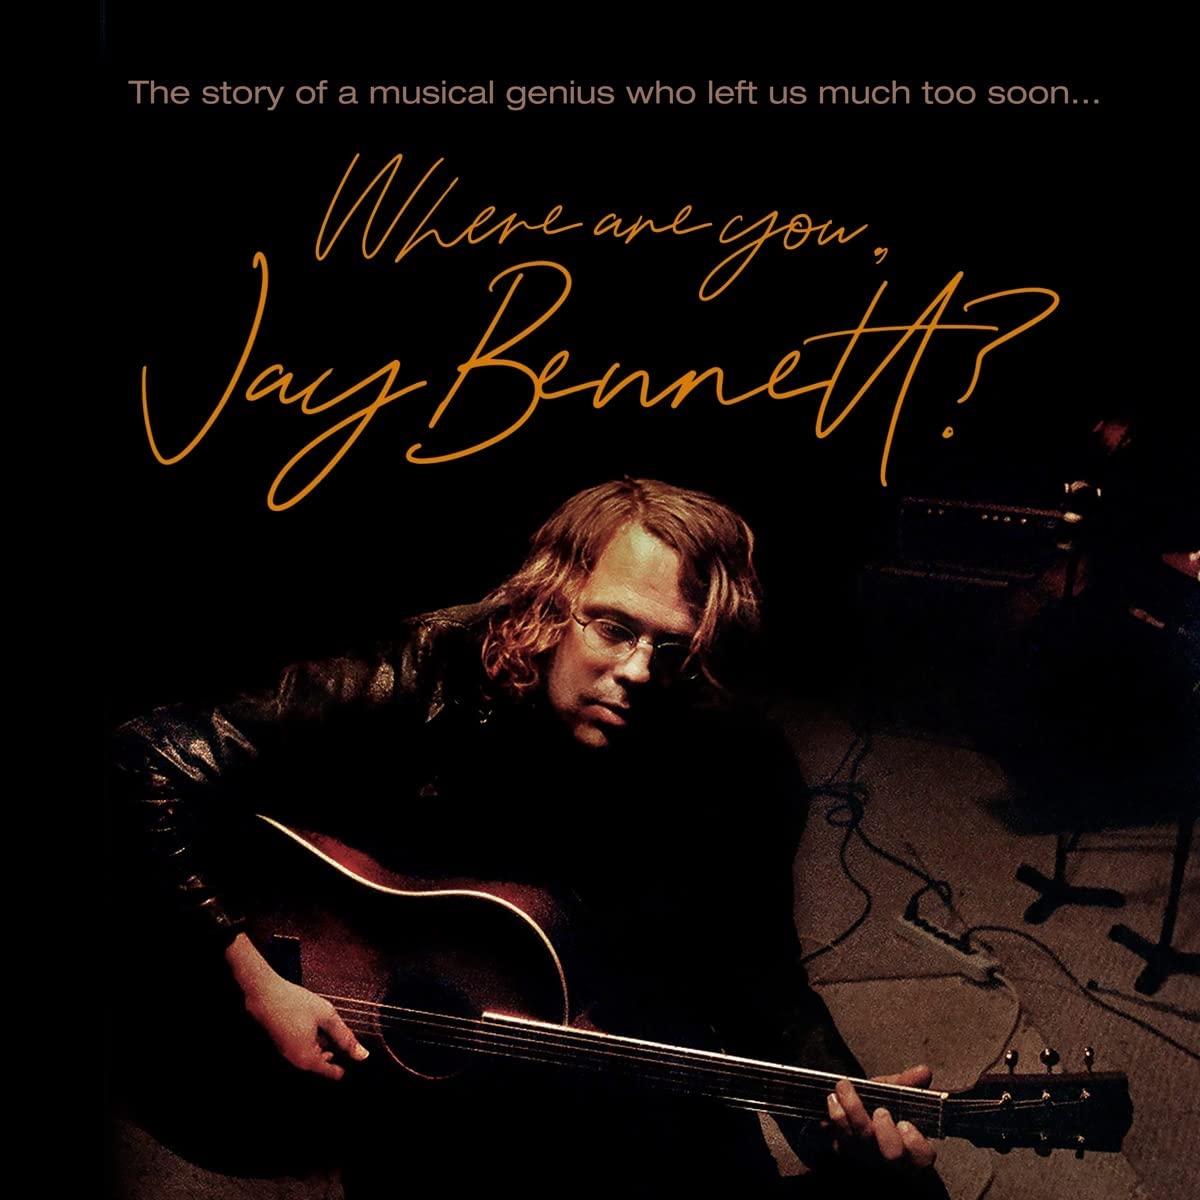 Jay Bennett - Where Are You, Jay Bennett? - 2LP/DVD